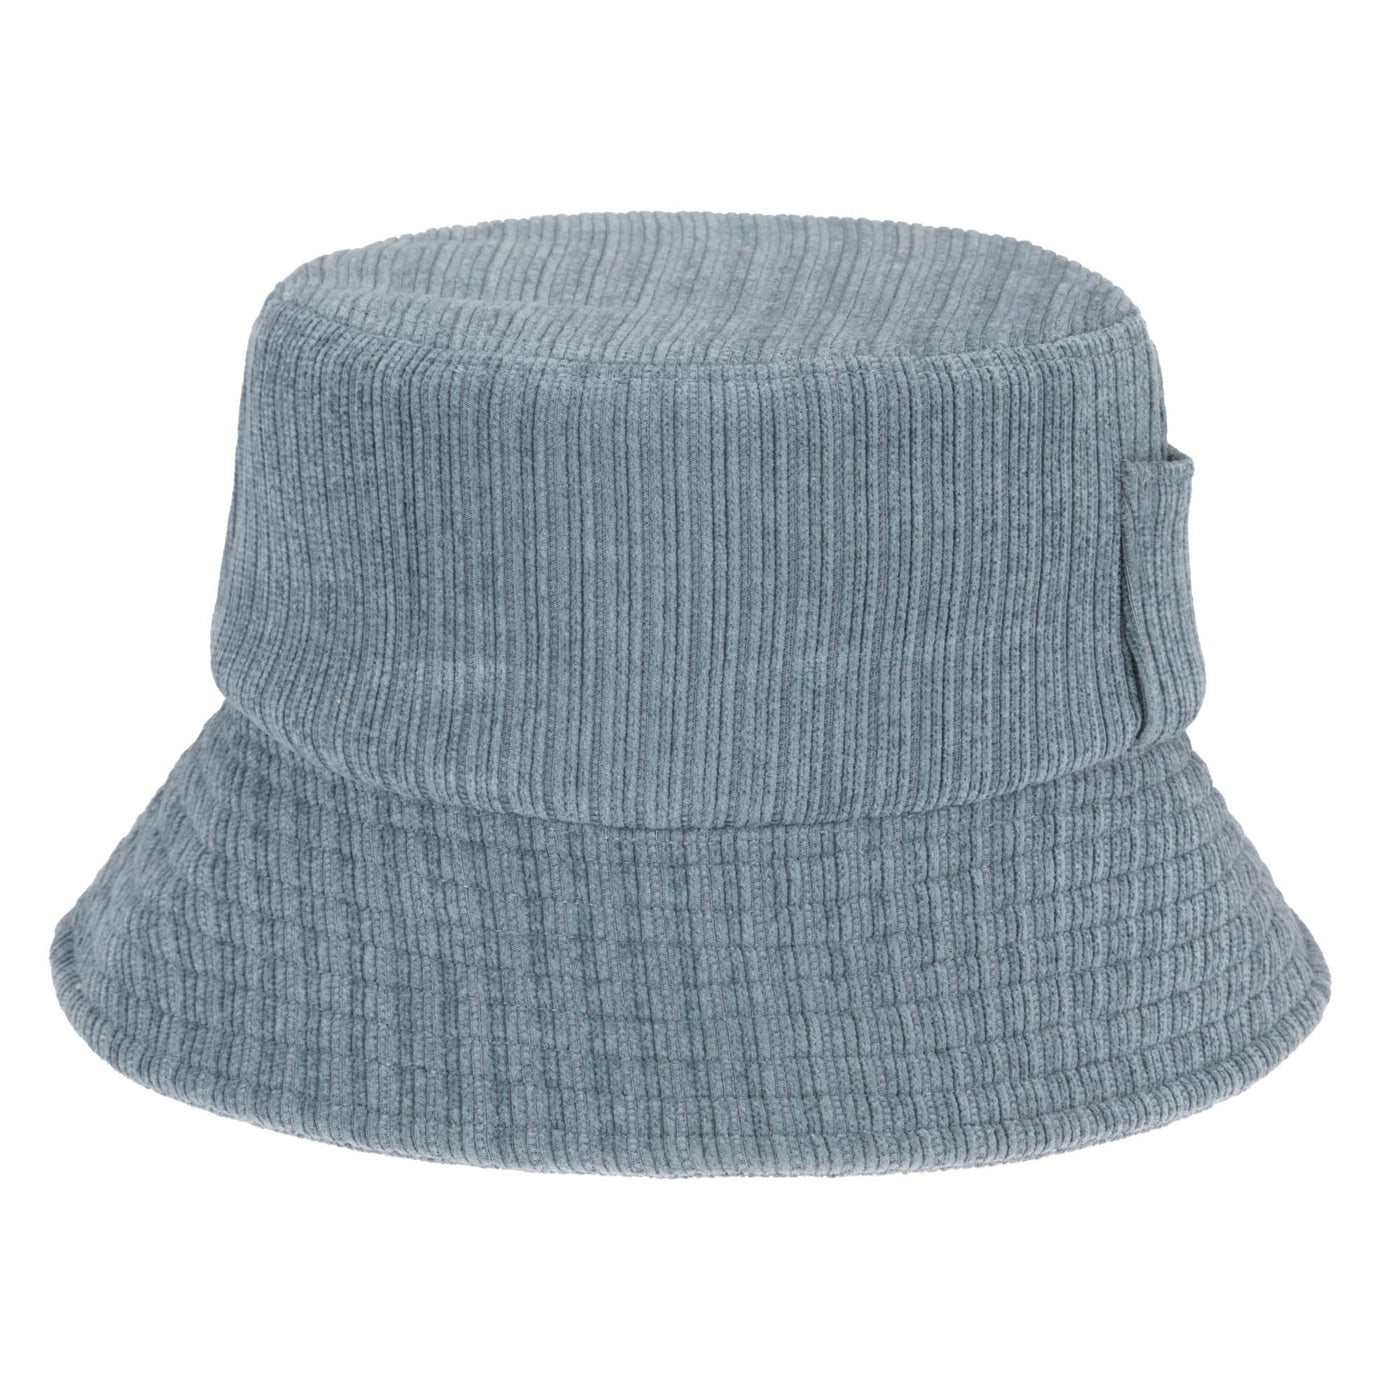 BUCKET - Cozy And Chic Bucket Hat